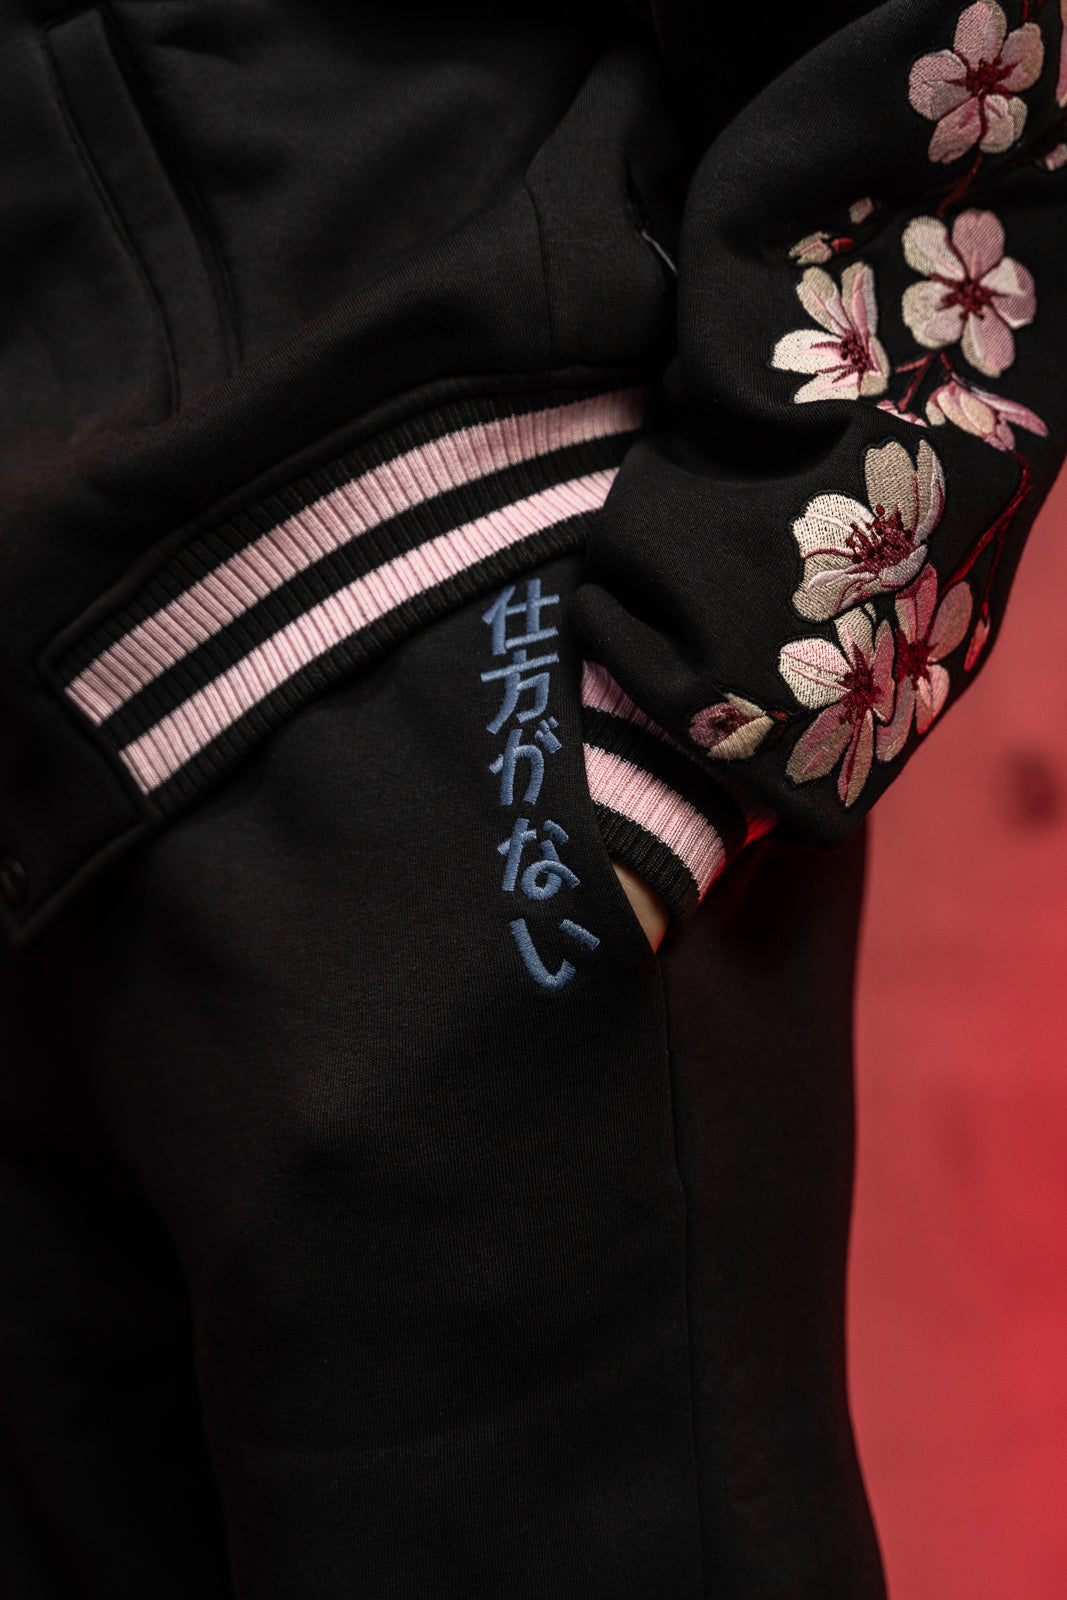 Sweat Pants - Pandorya -  Sakura Collection 🌸